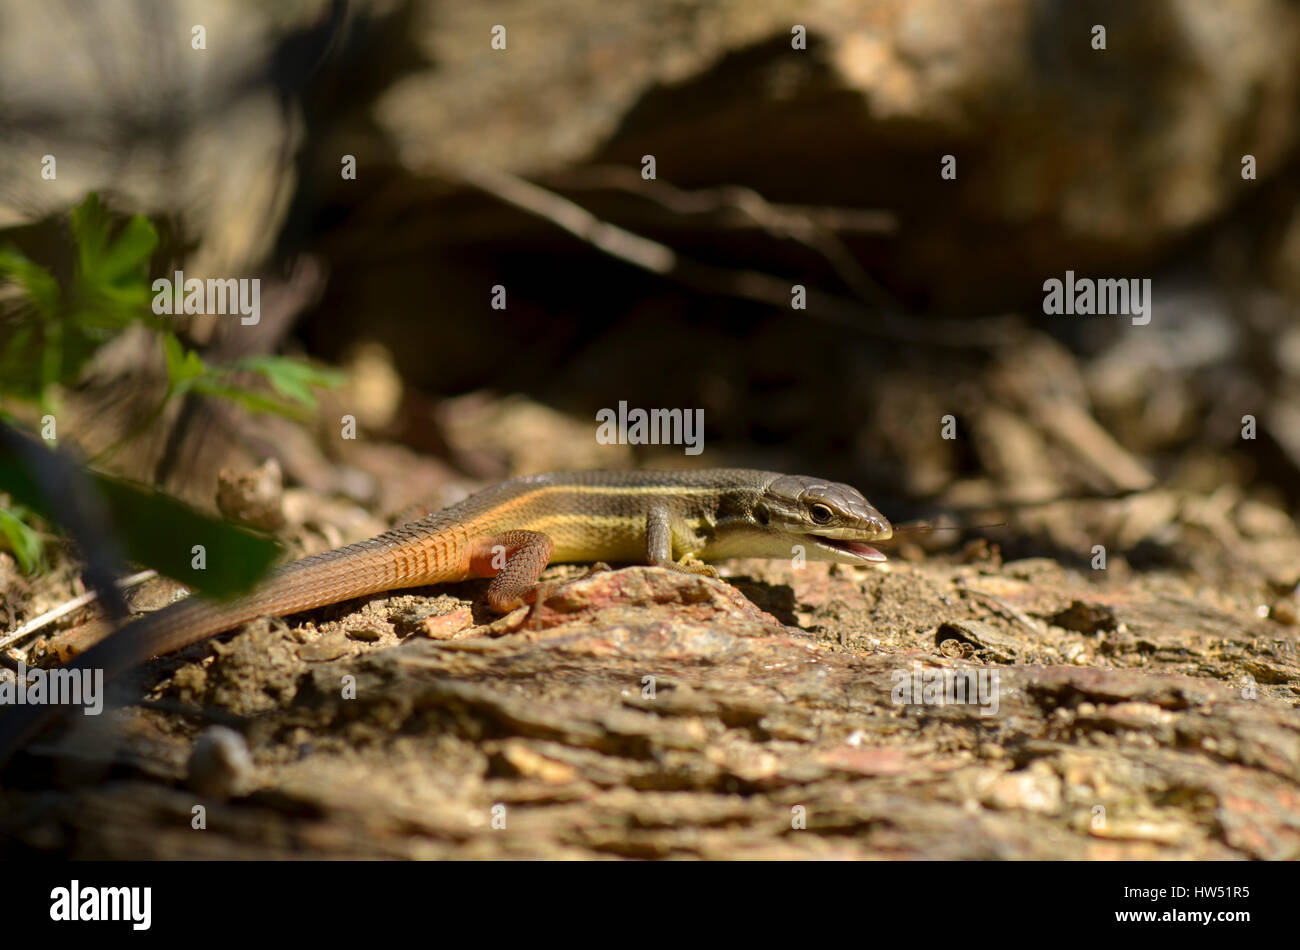 Lizard, Large Psammodromus,Psammodromus algirus, lizard on rock, Andalusia, Spain Stock Photo